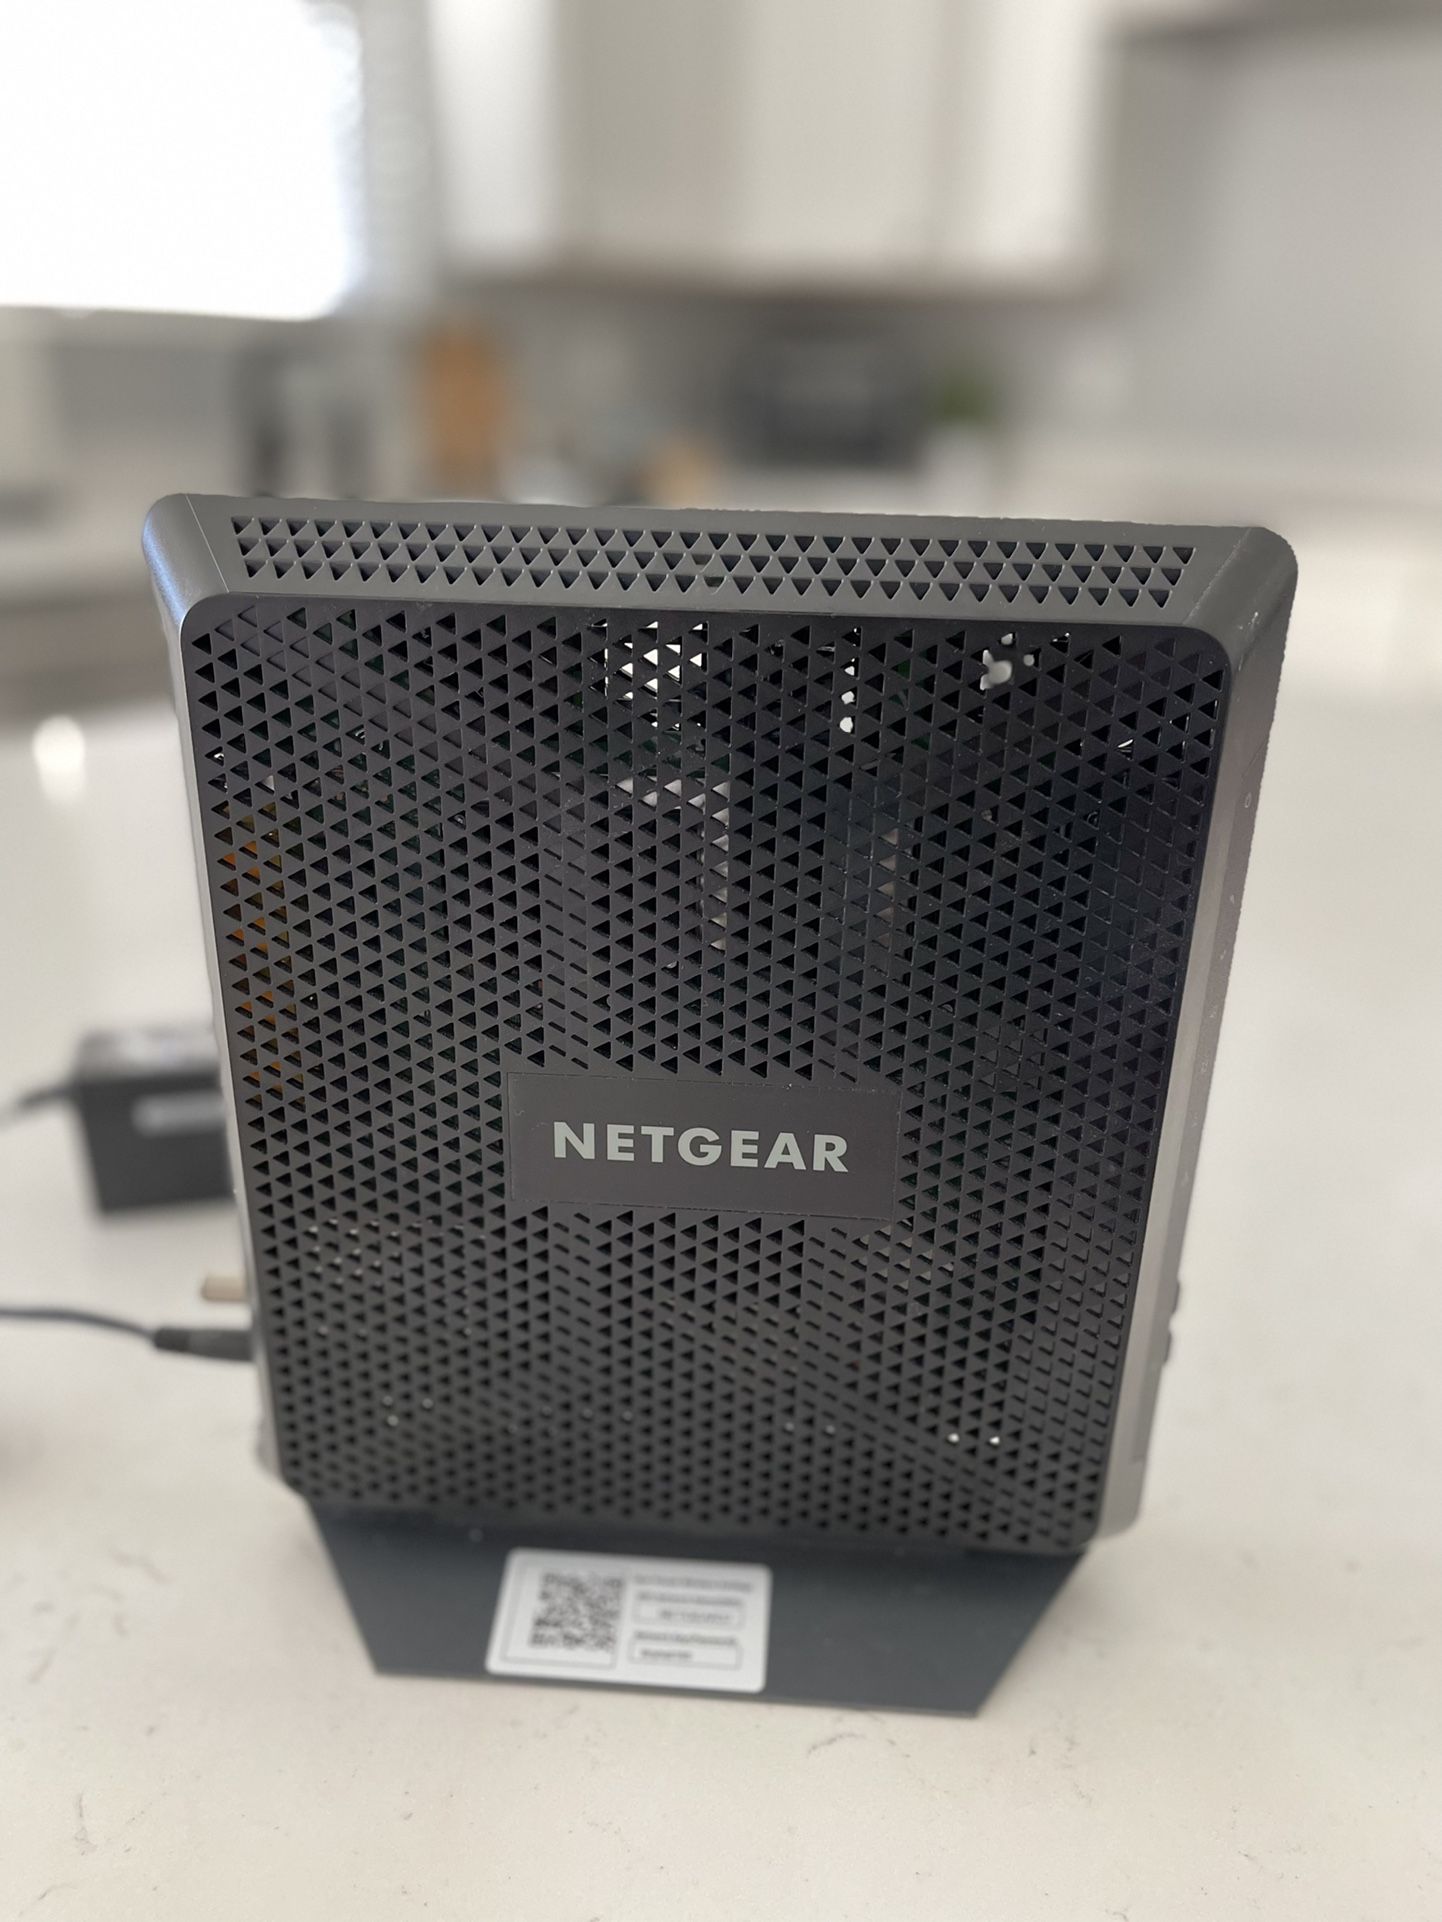 NETGEAR NightHawk C7000v2 Cable Modem Router